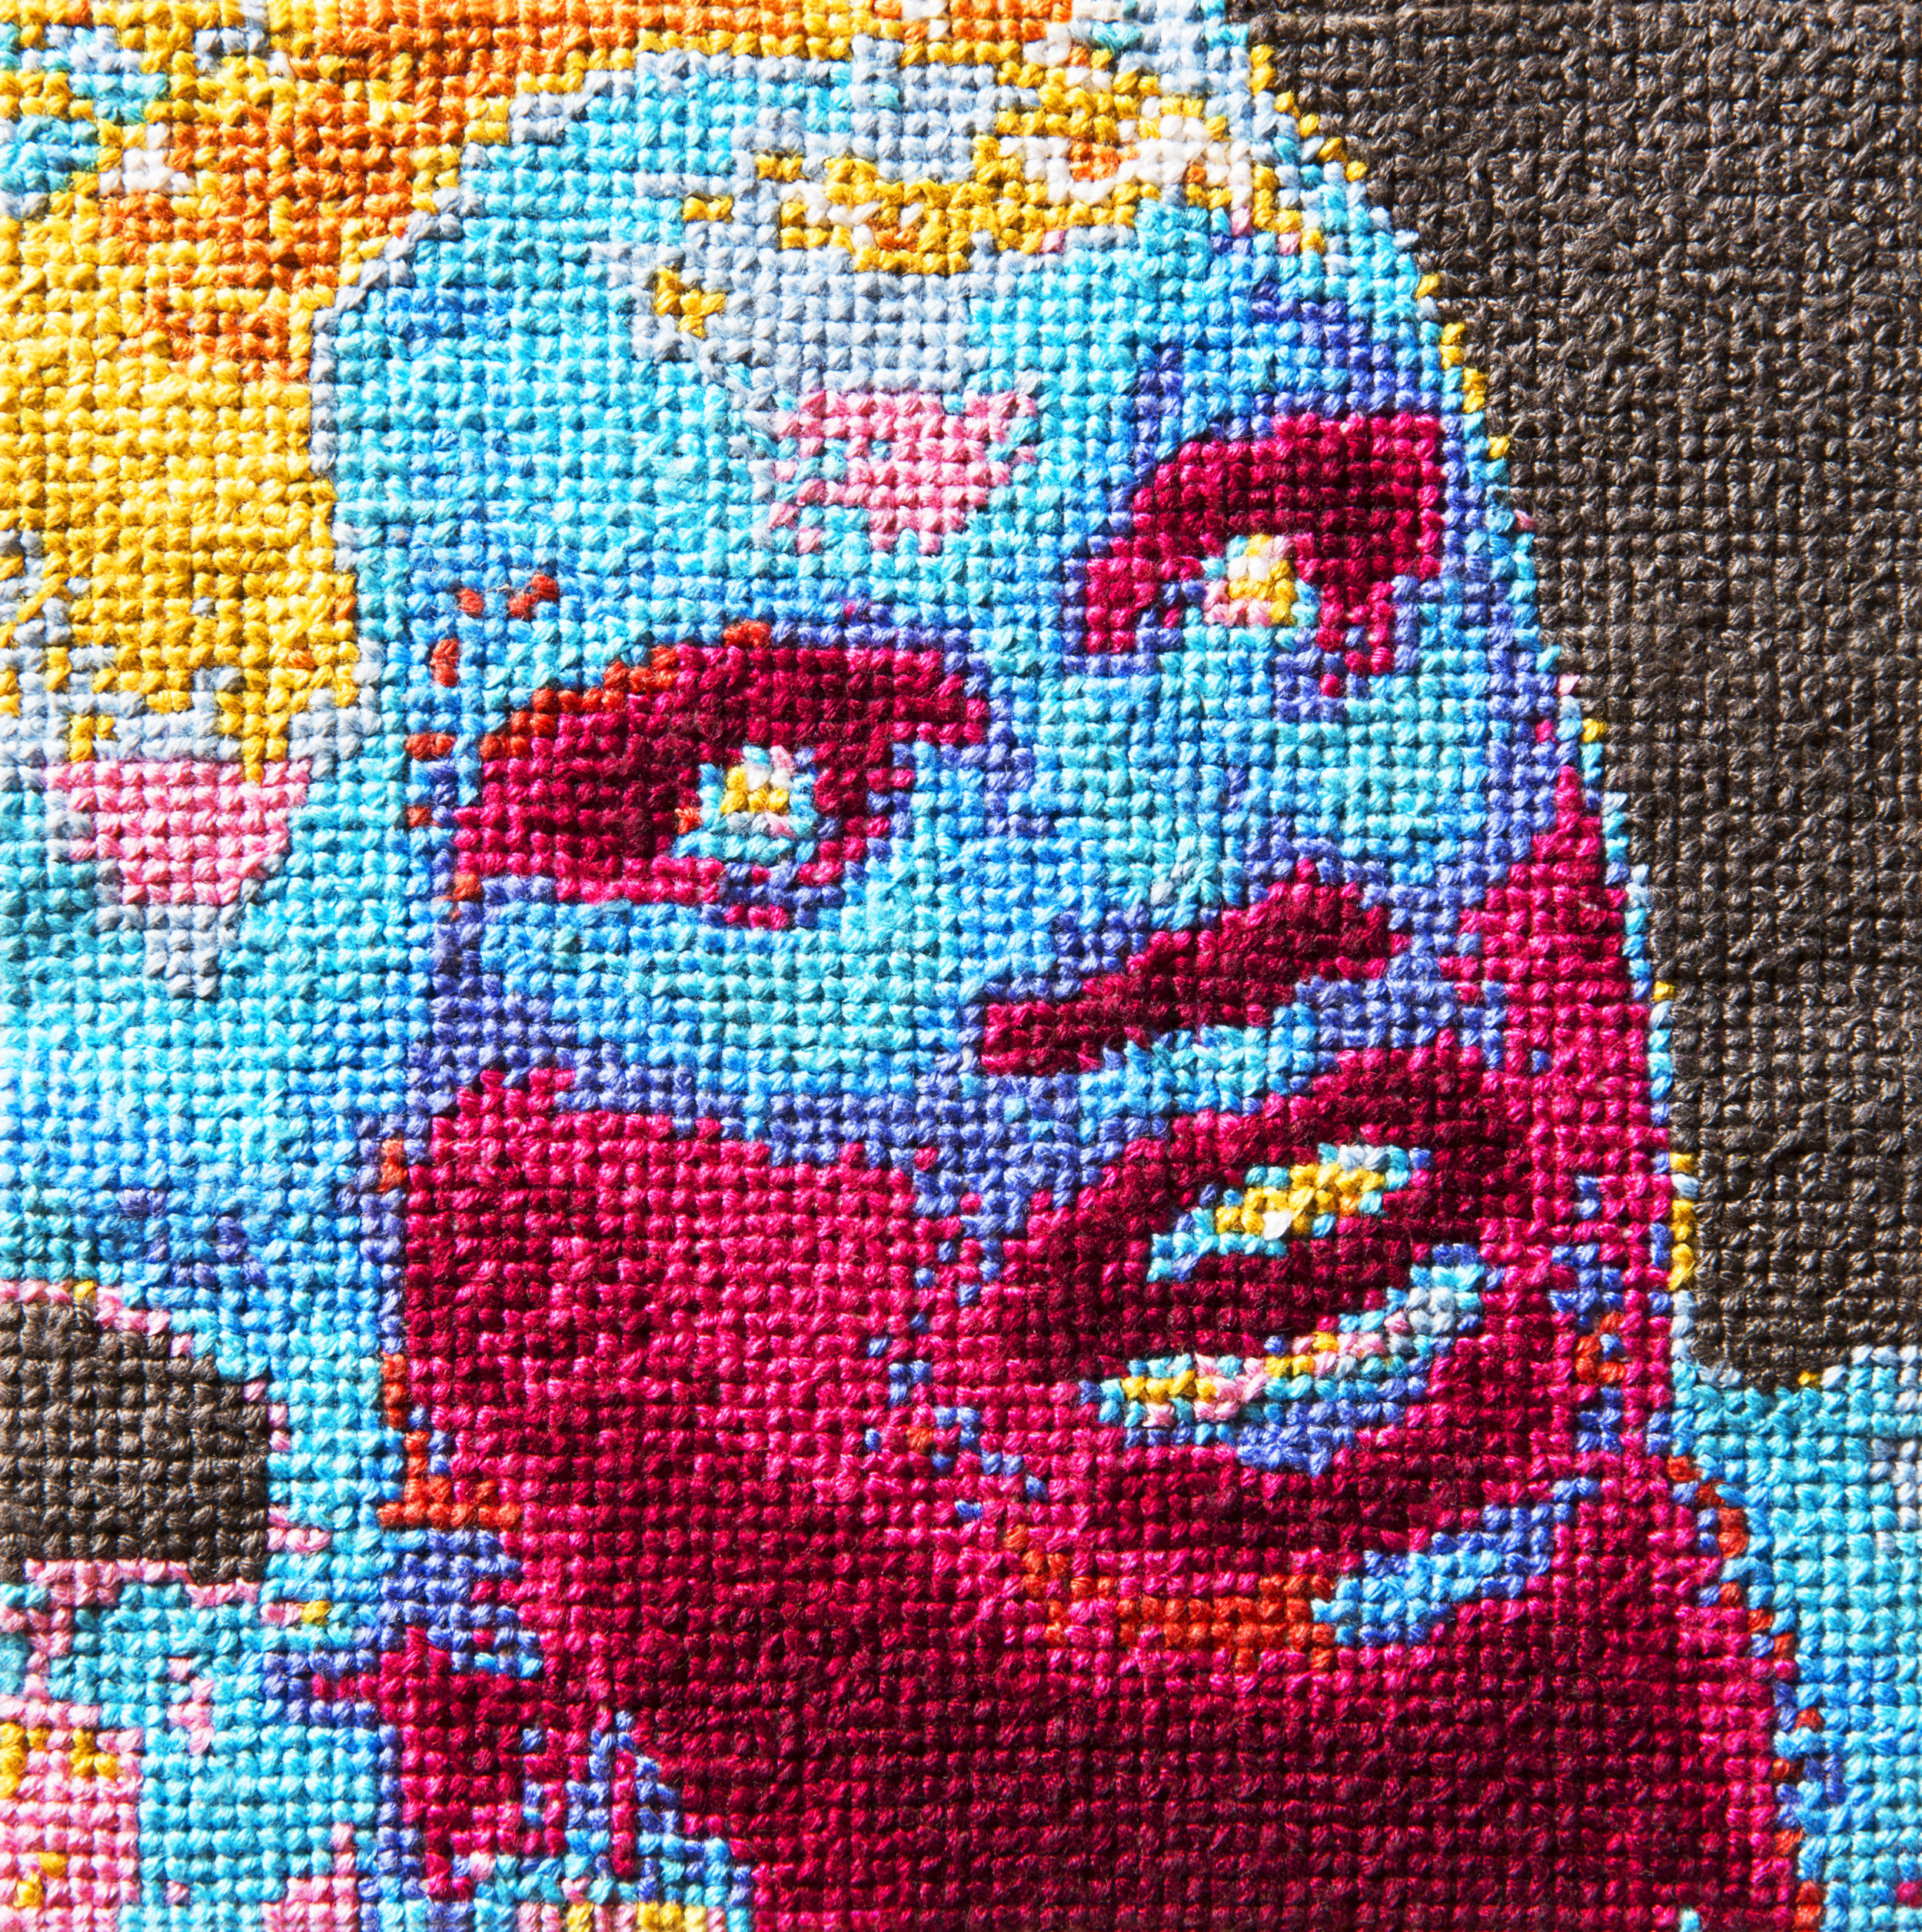   Frame 23   By Ashley Anderson  5 x 5 inches  Cotton thread on aida cloth  2013 